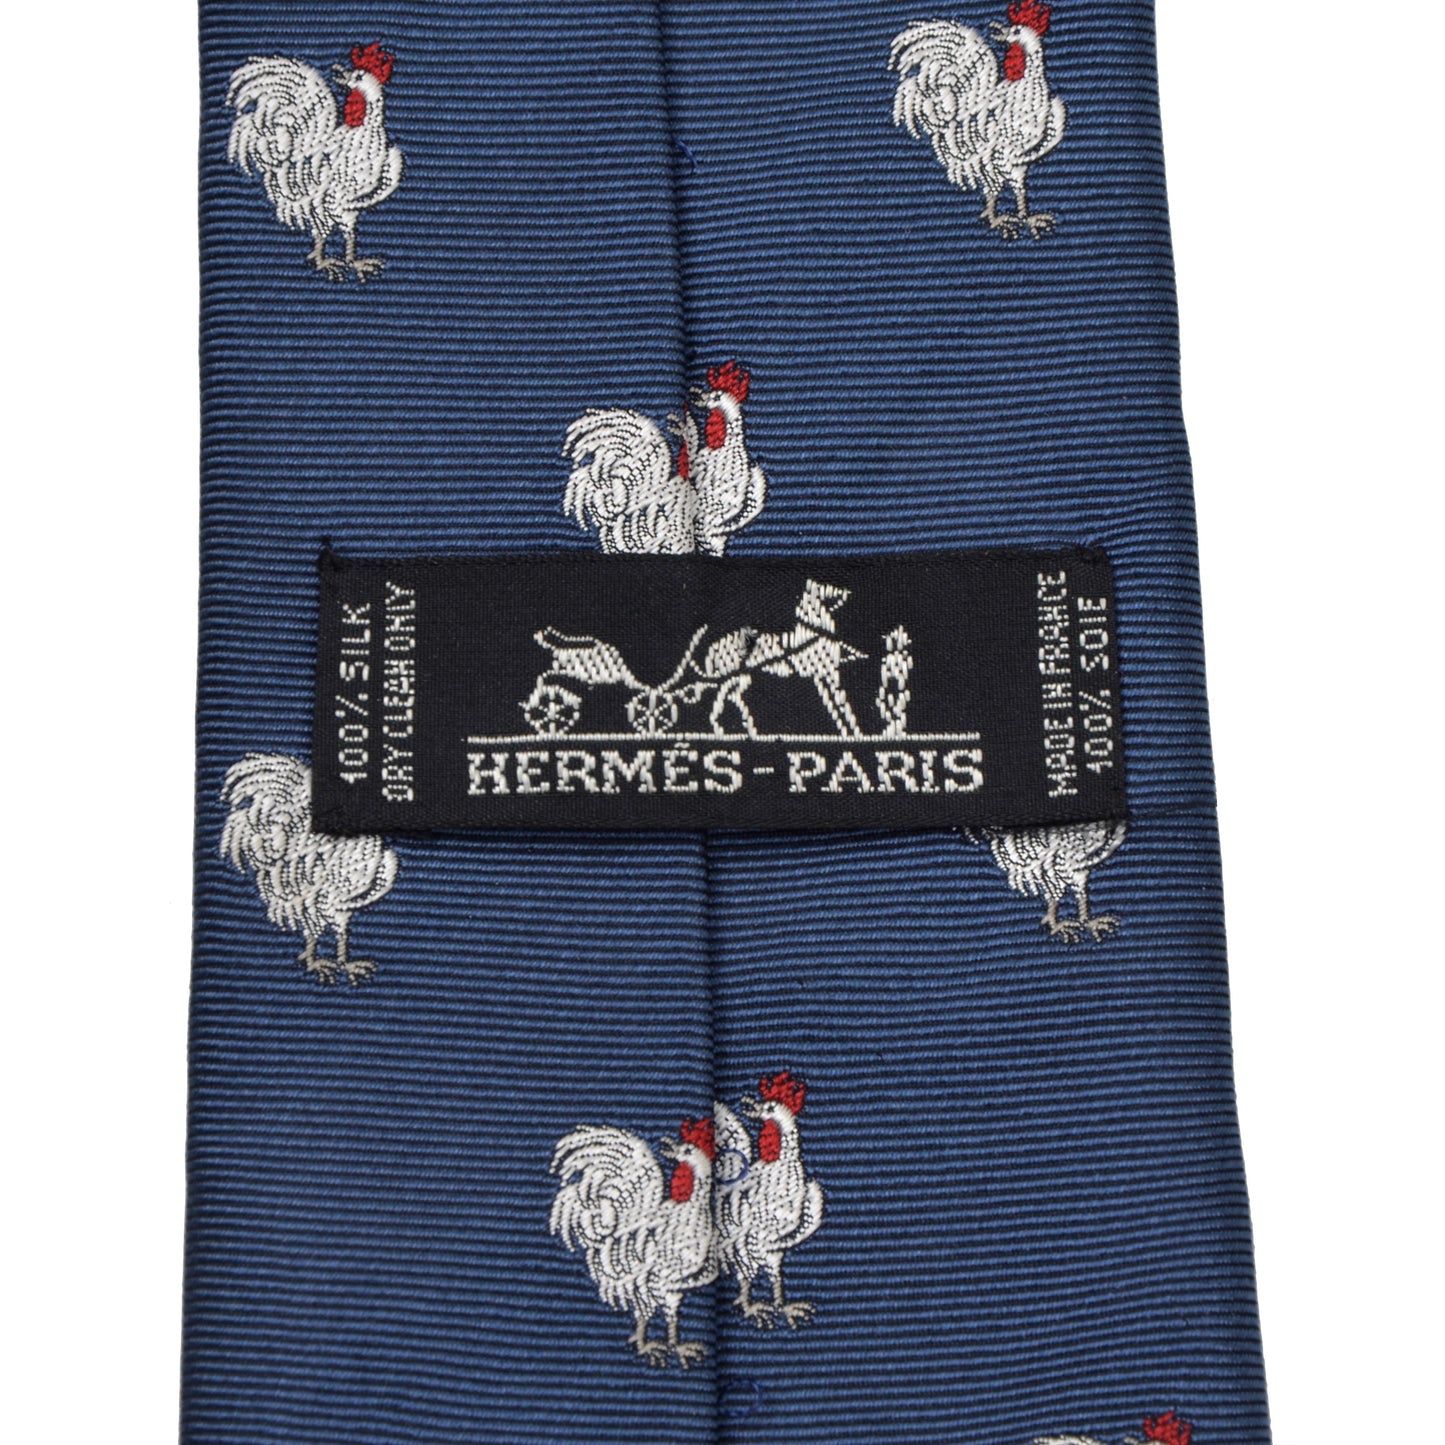 Hermès Paris Embroidered Silk Tie - Rooster